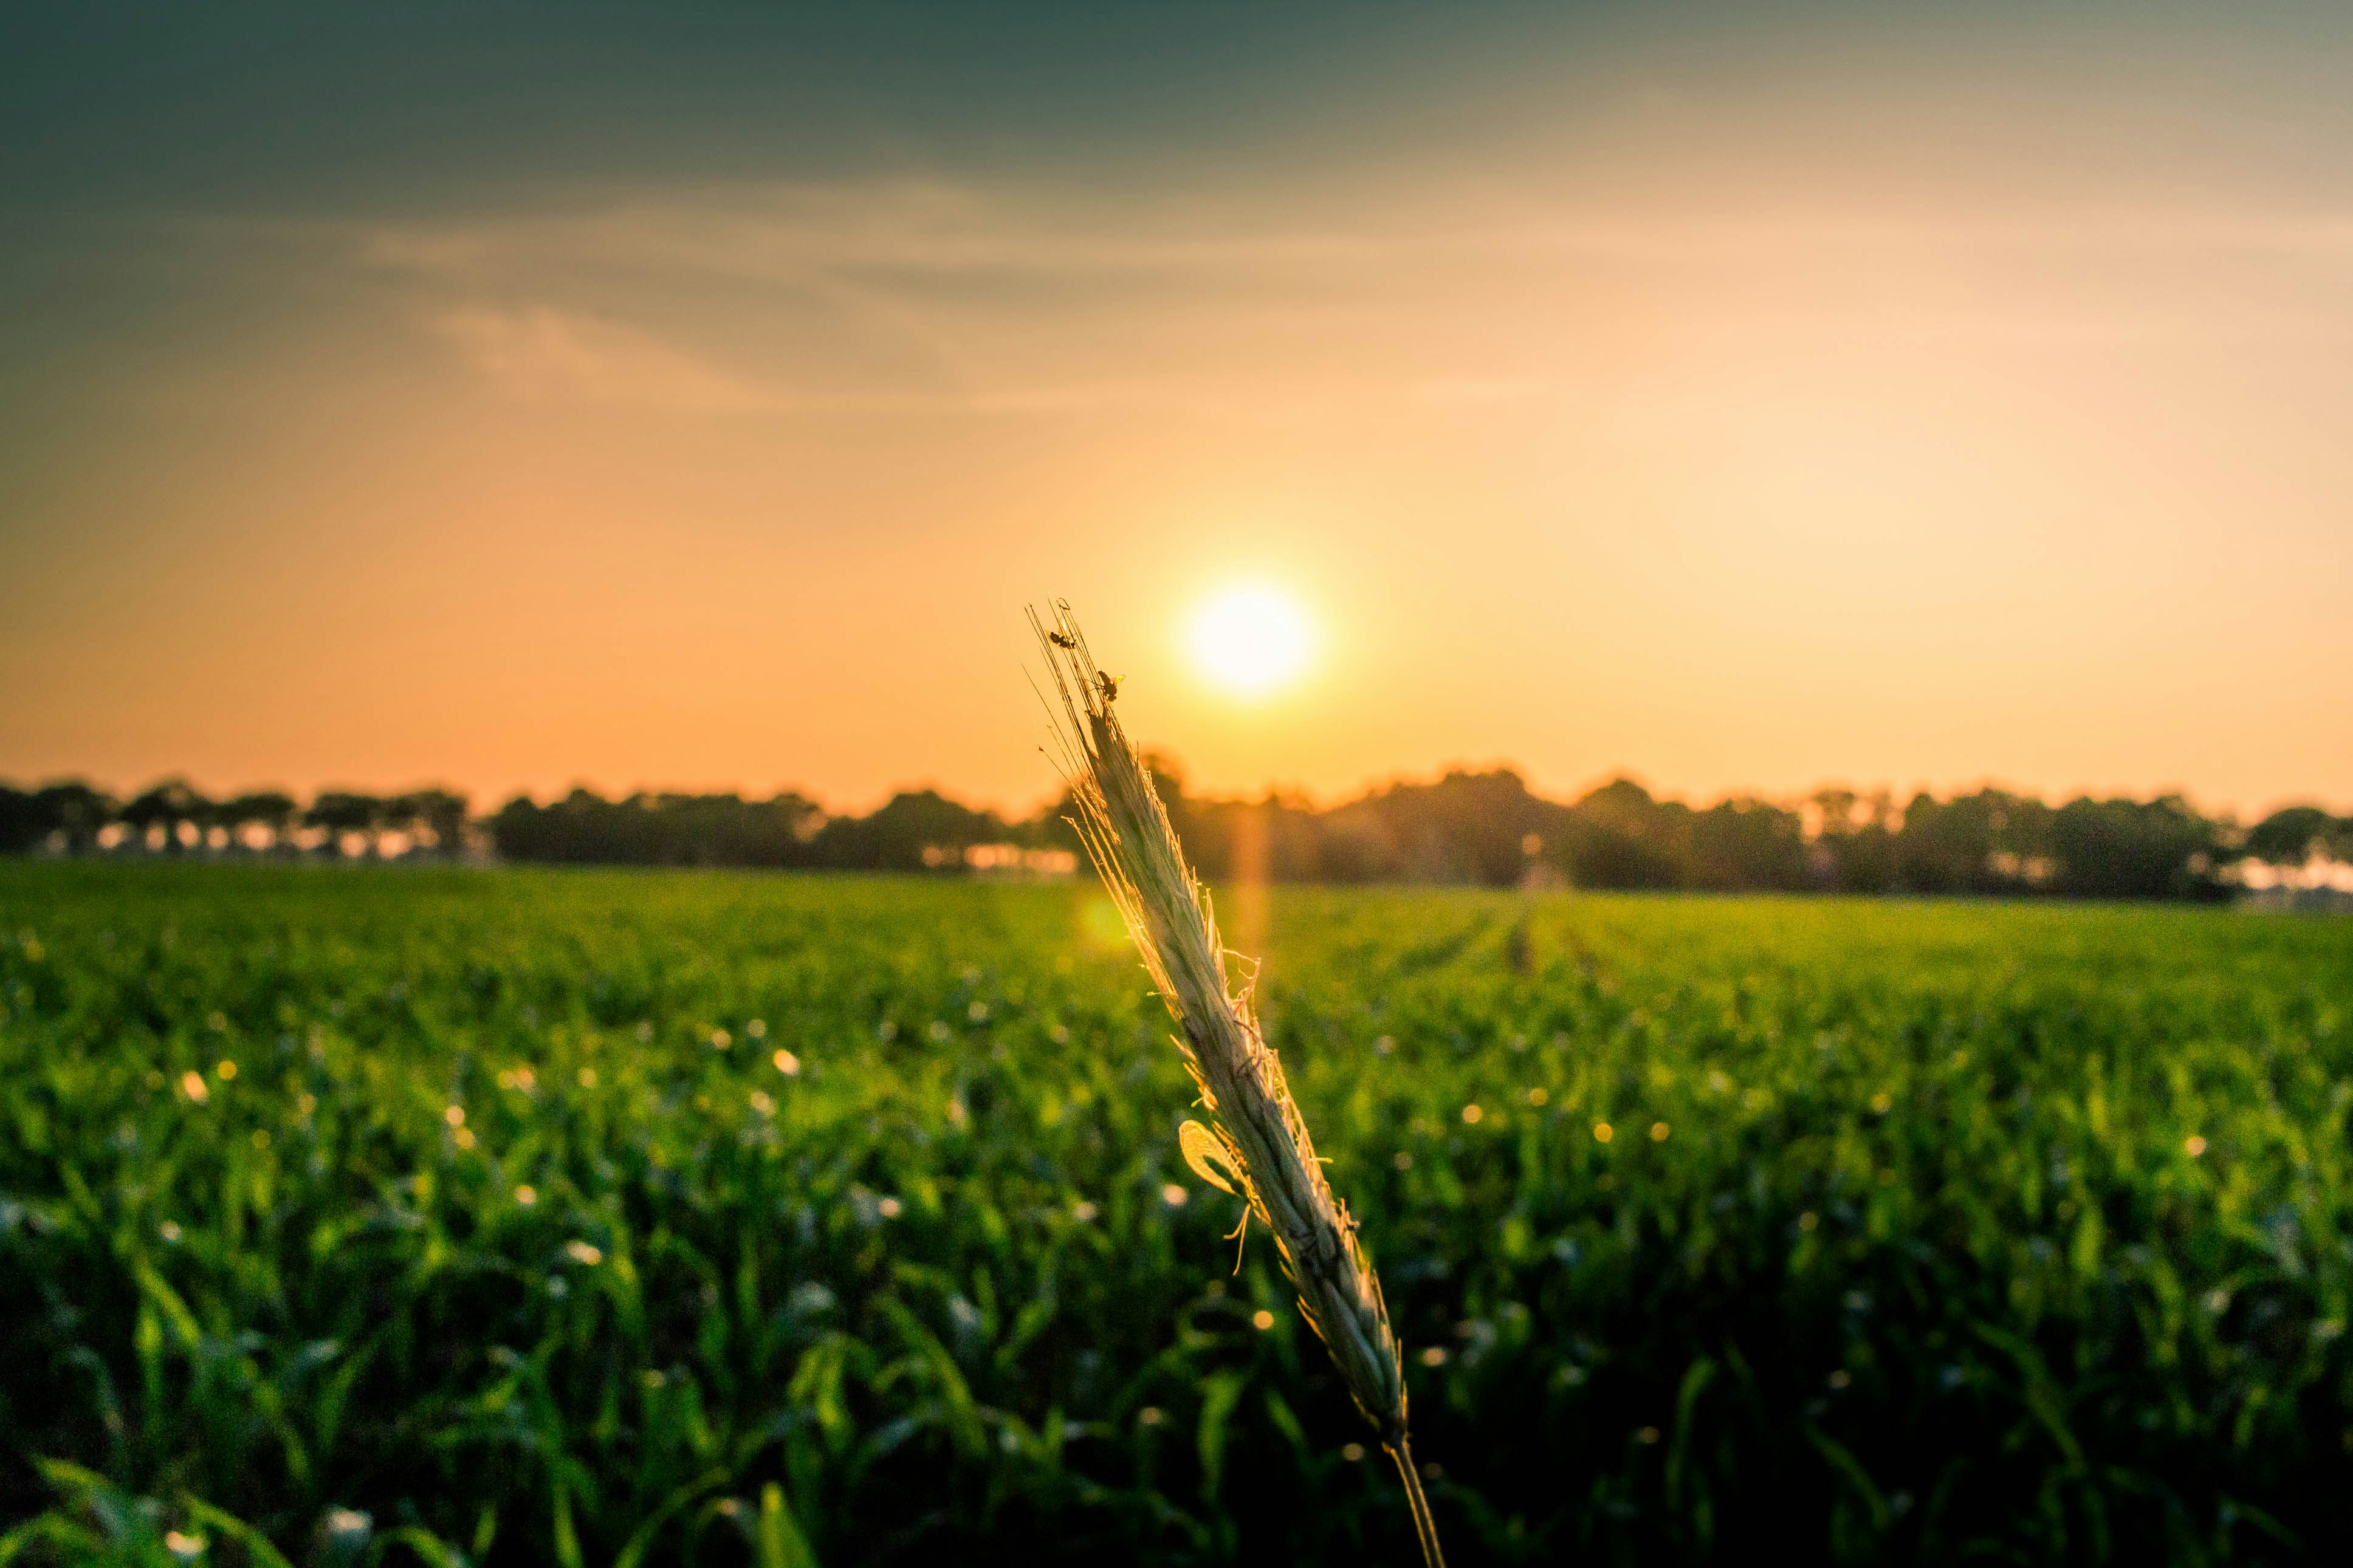 green corn field under sunrise